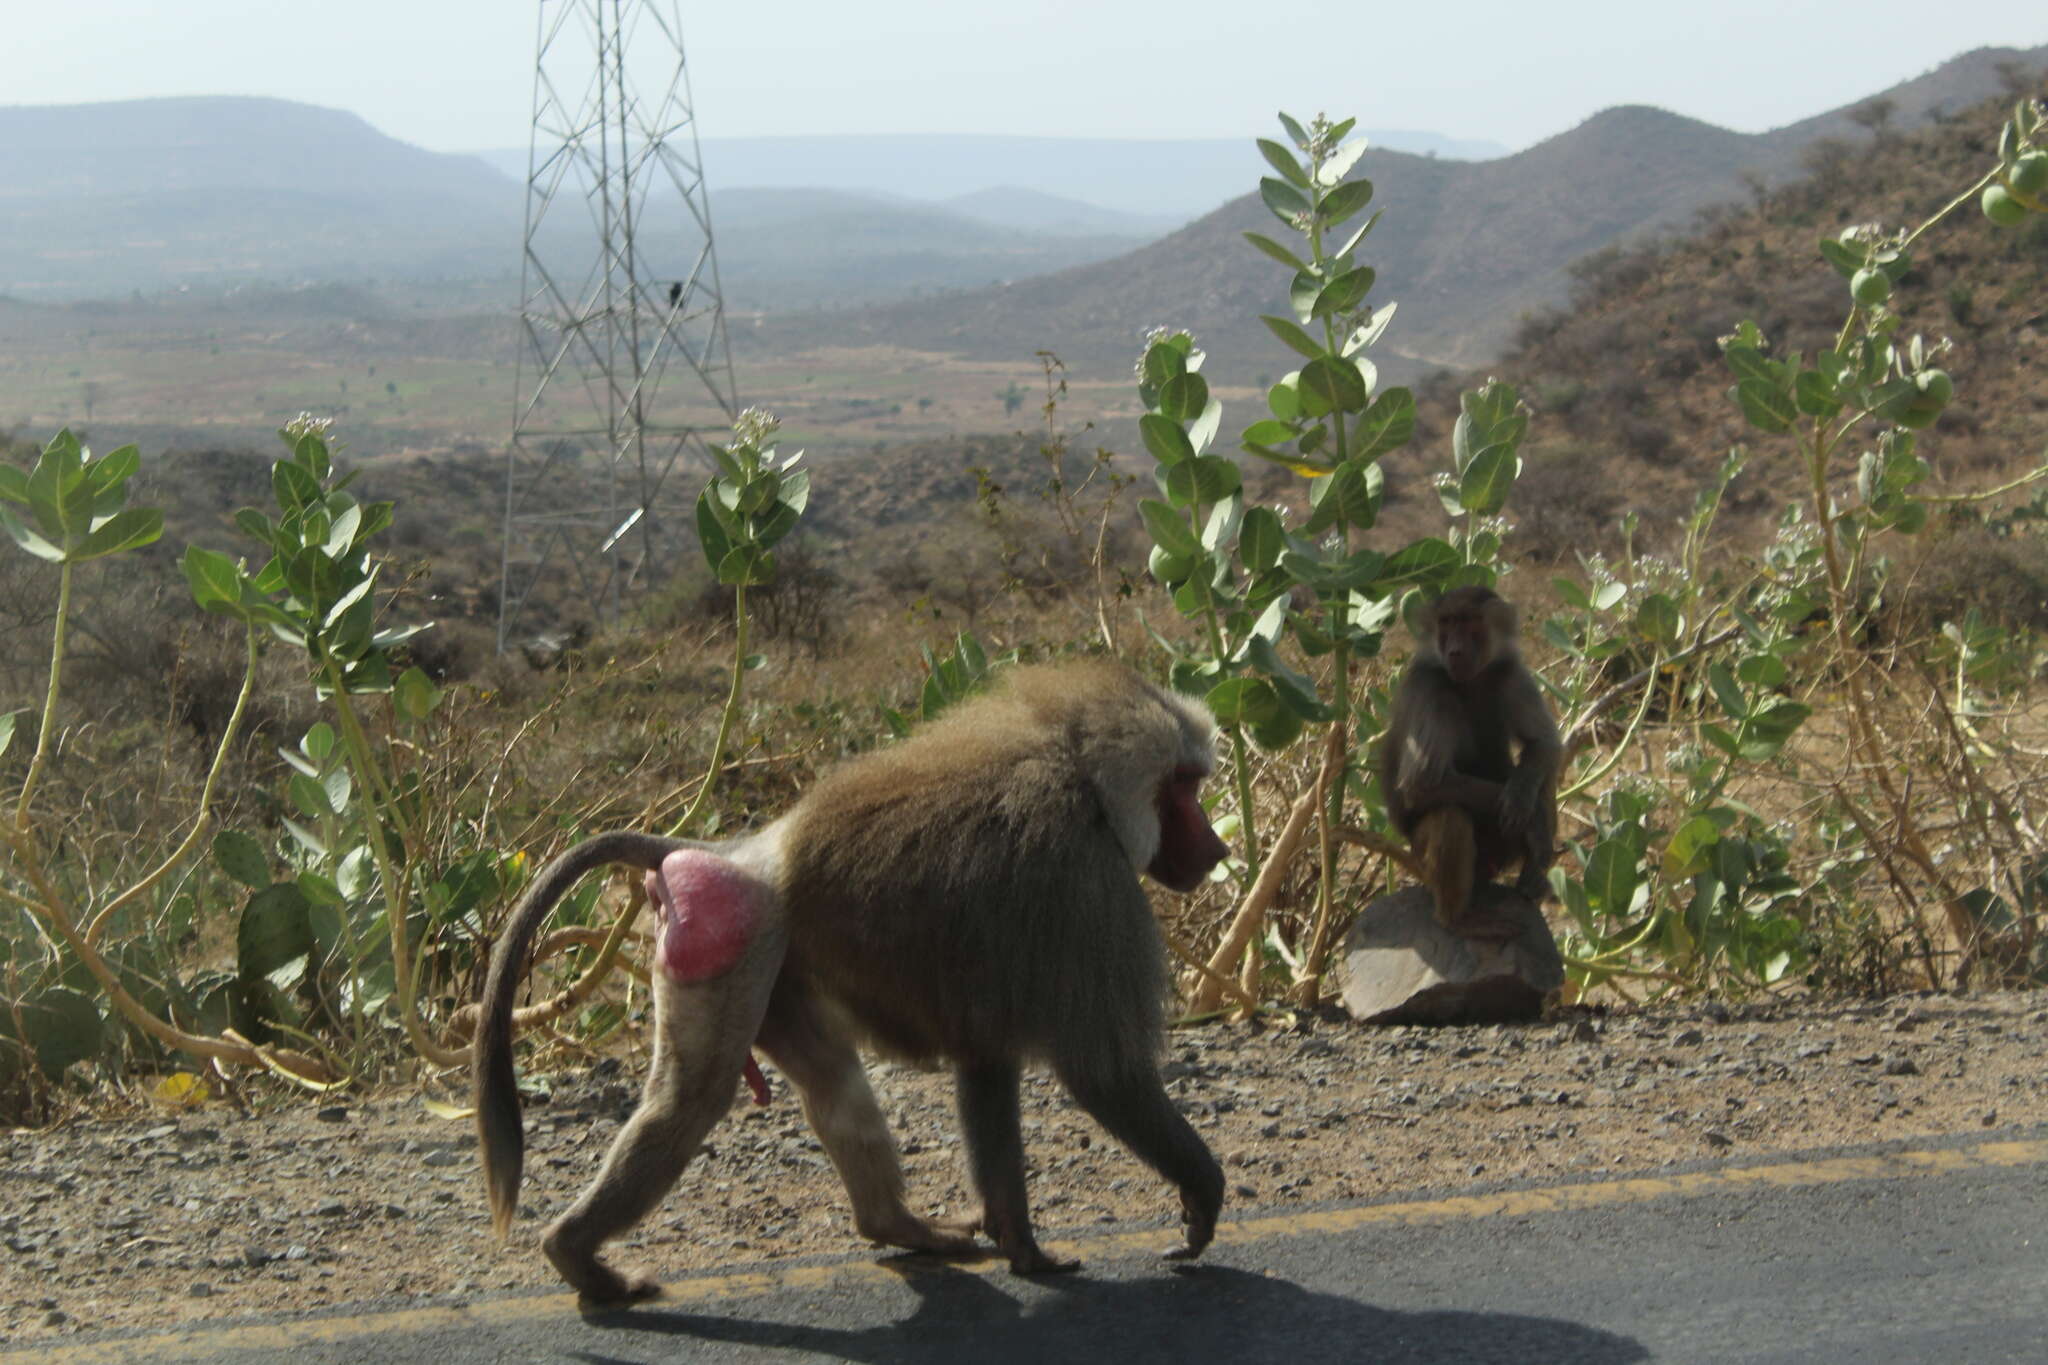 Image of hamadryas baboon